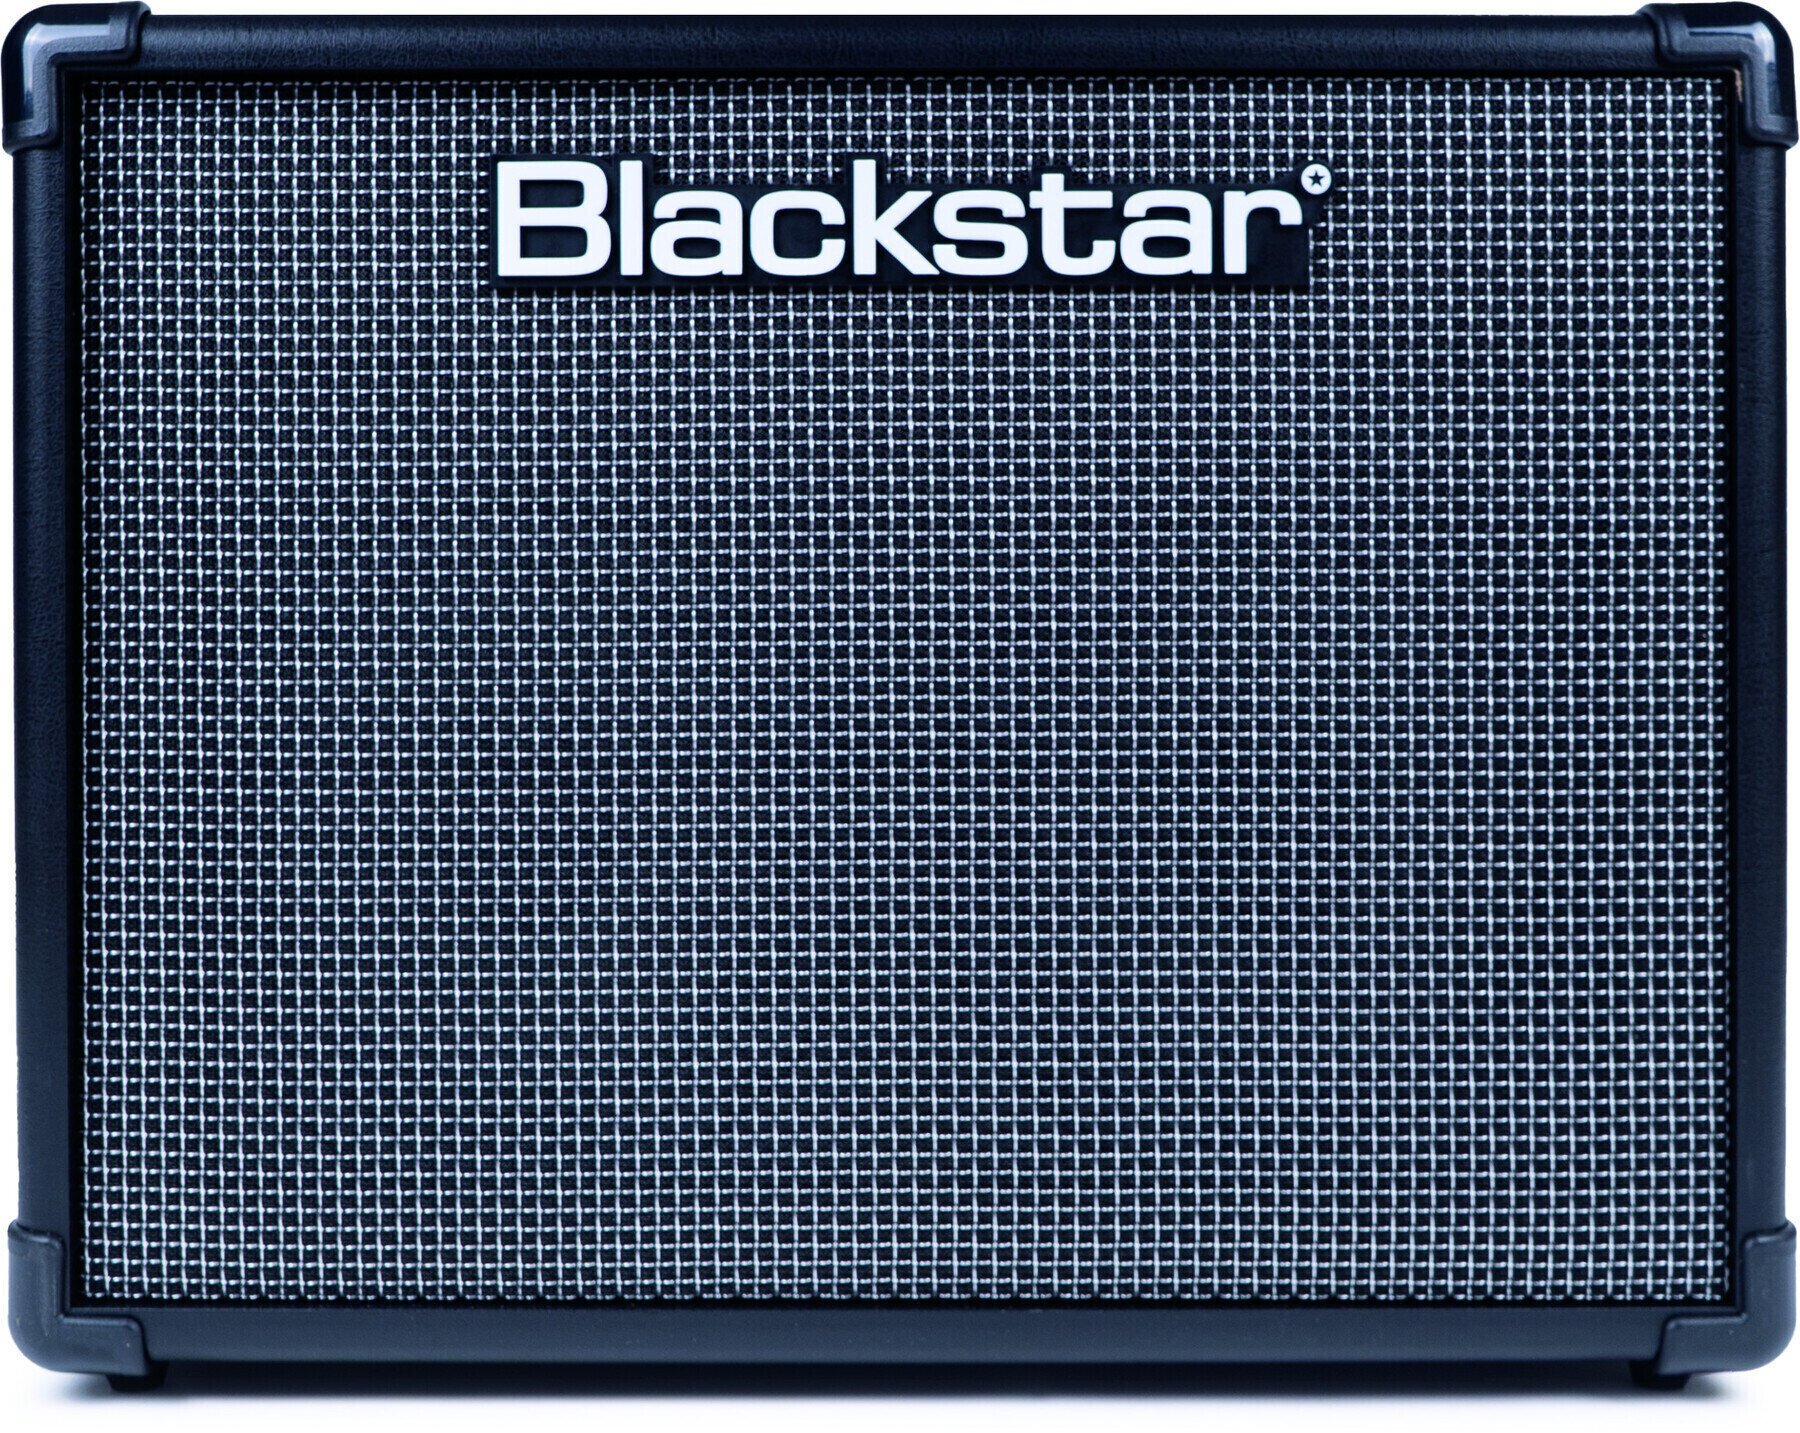 Modelling Gitarrencombo Blackstar ID:Core40 V3